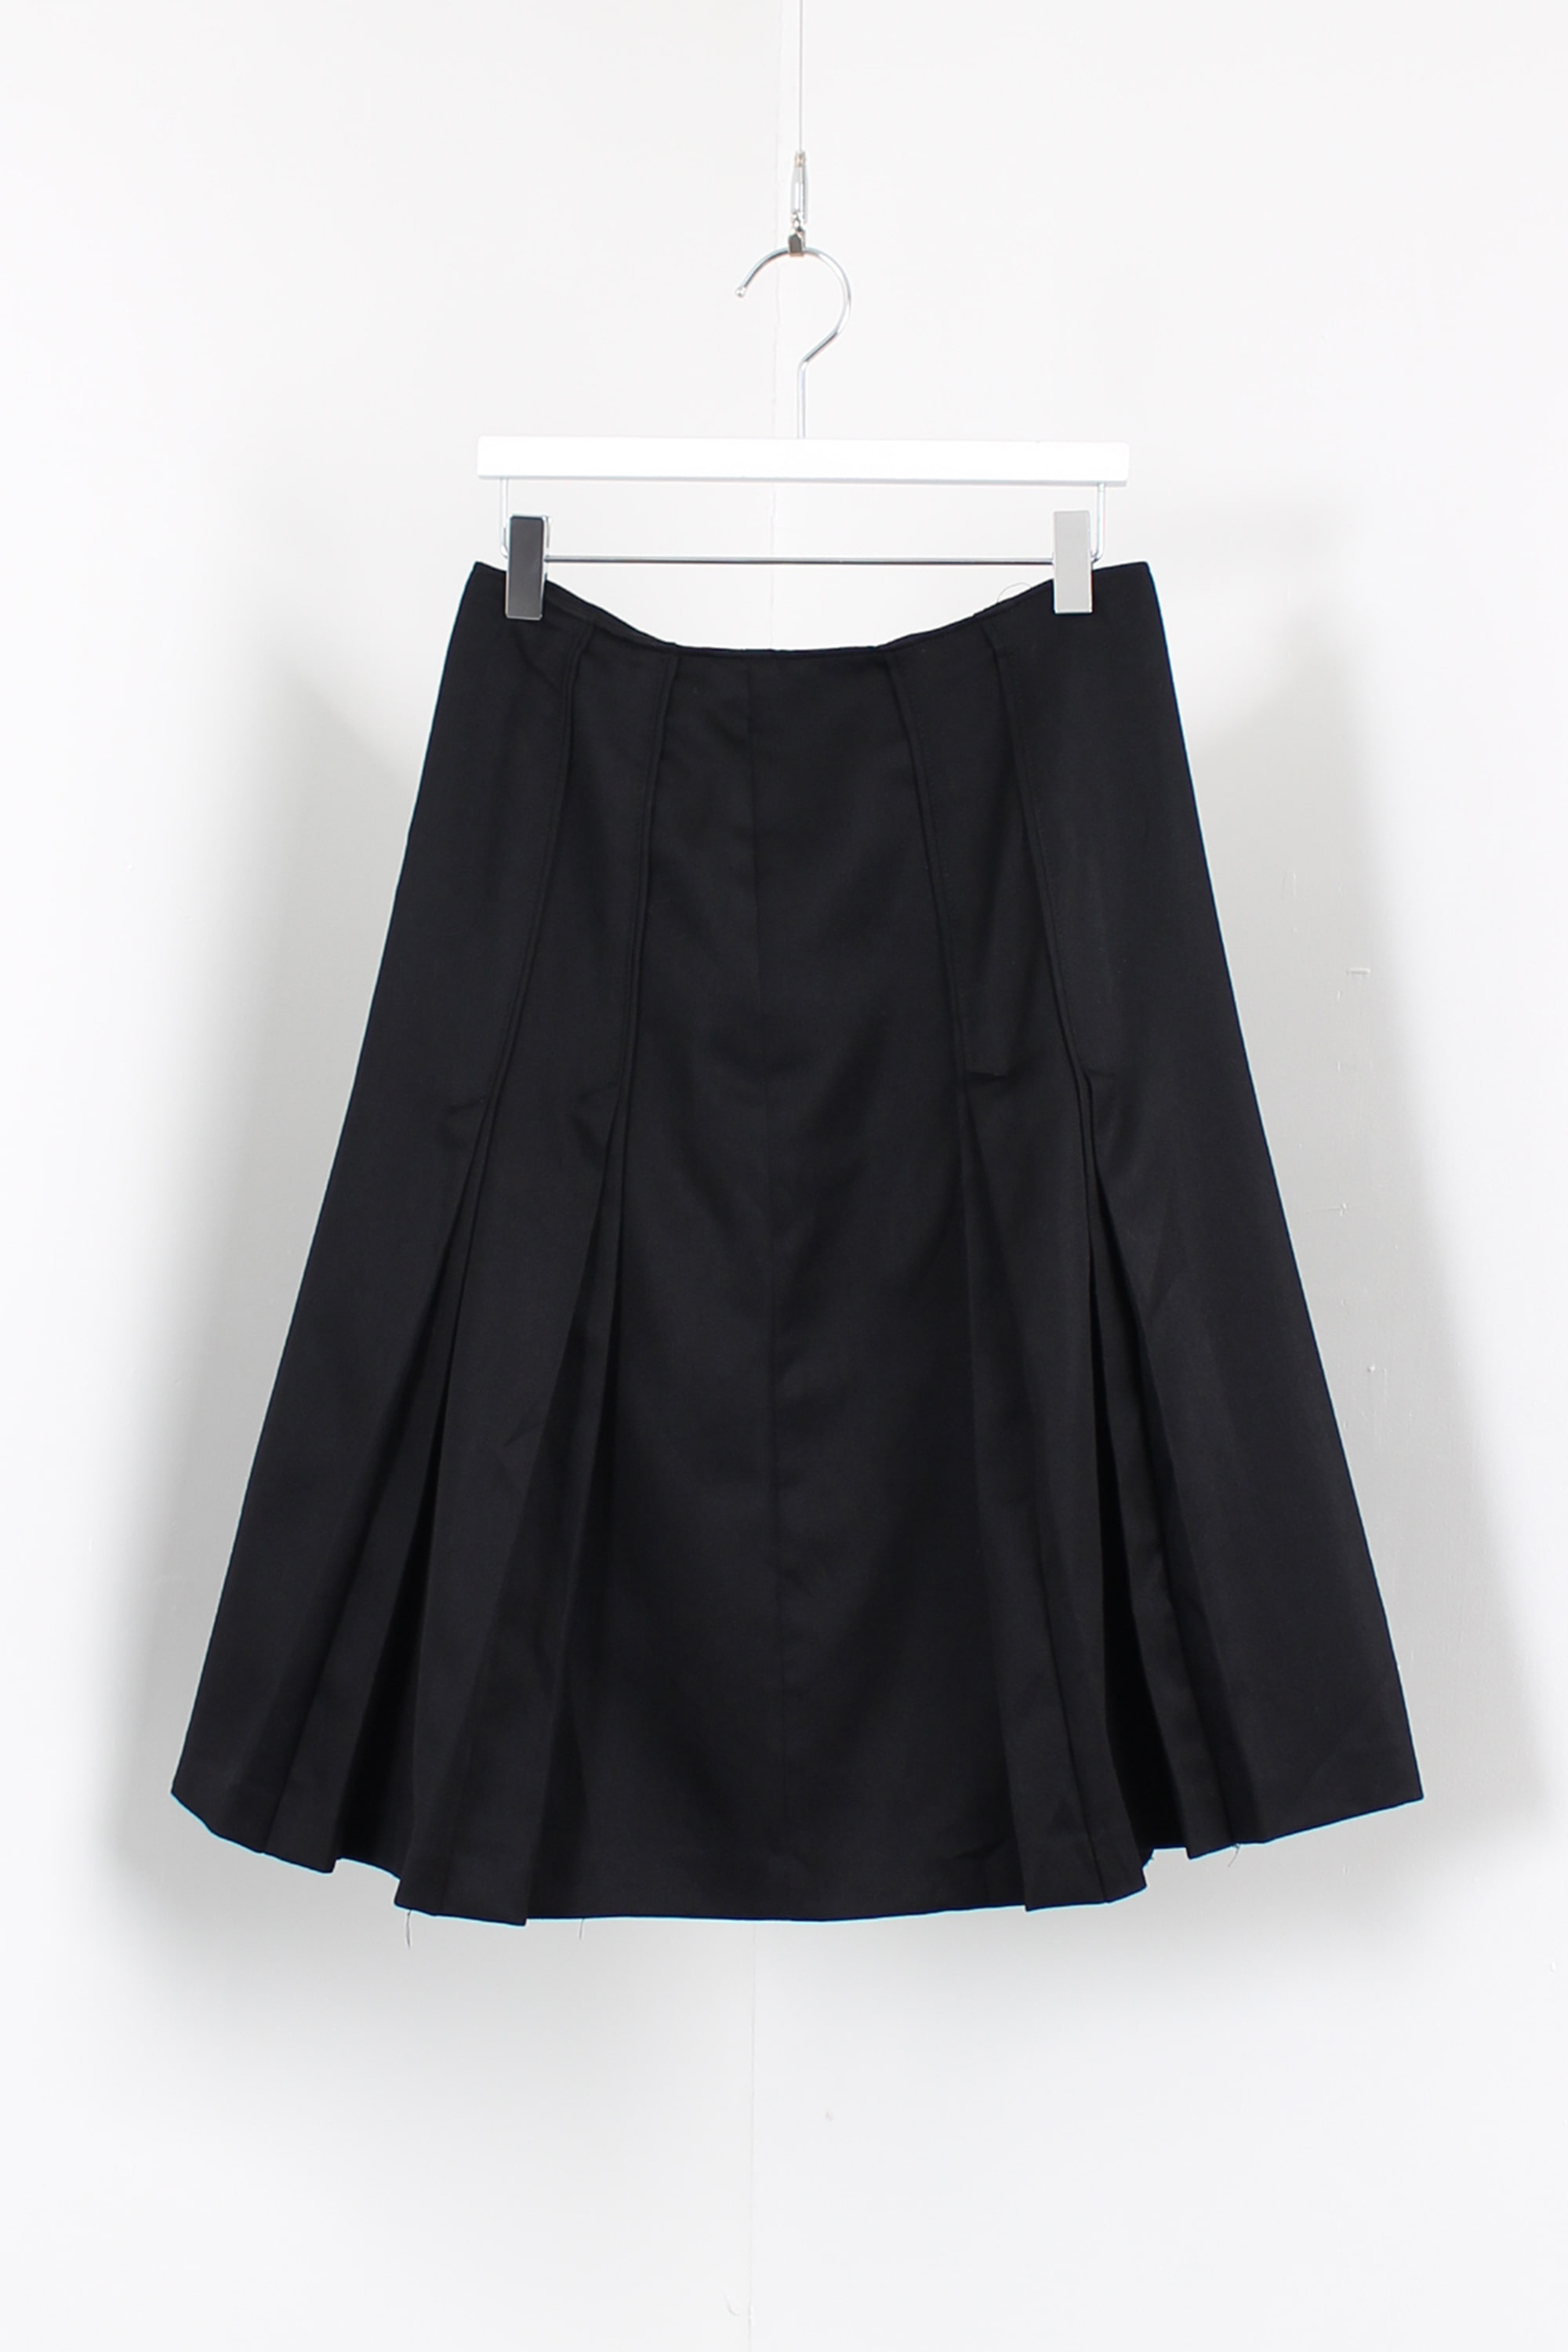 LAUTREAMONT skirt